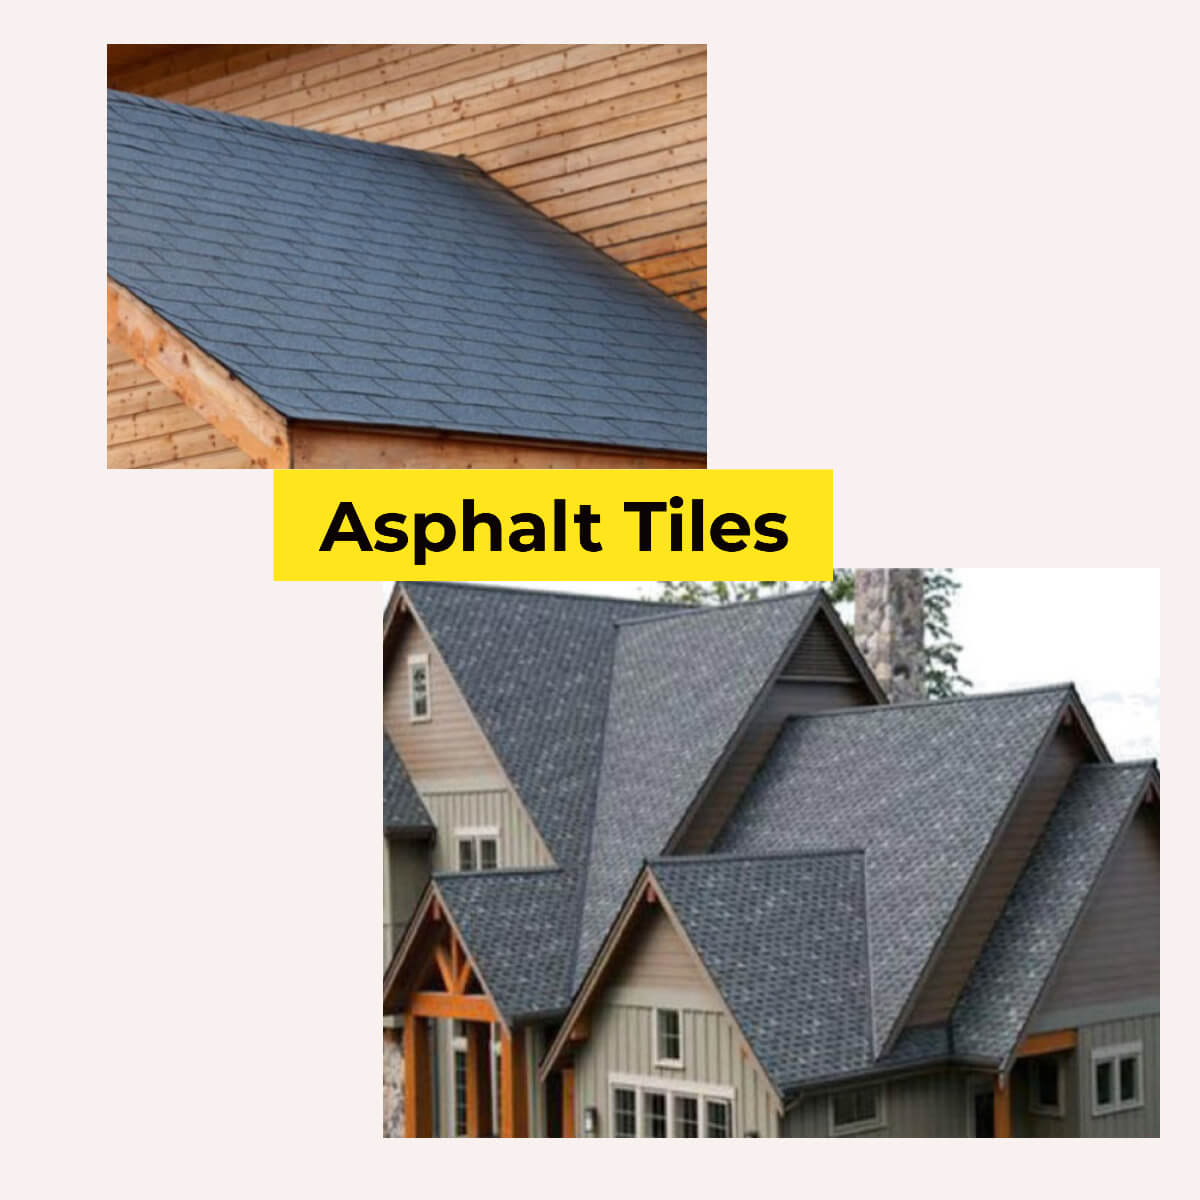 Asphalt Tiles